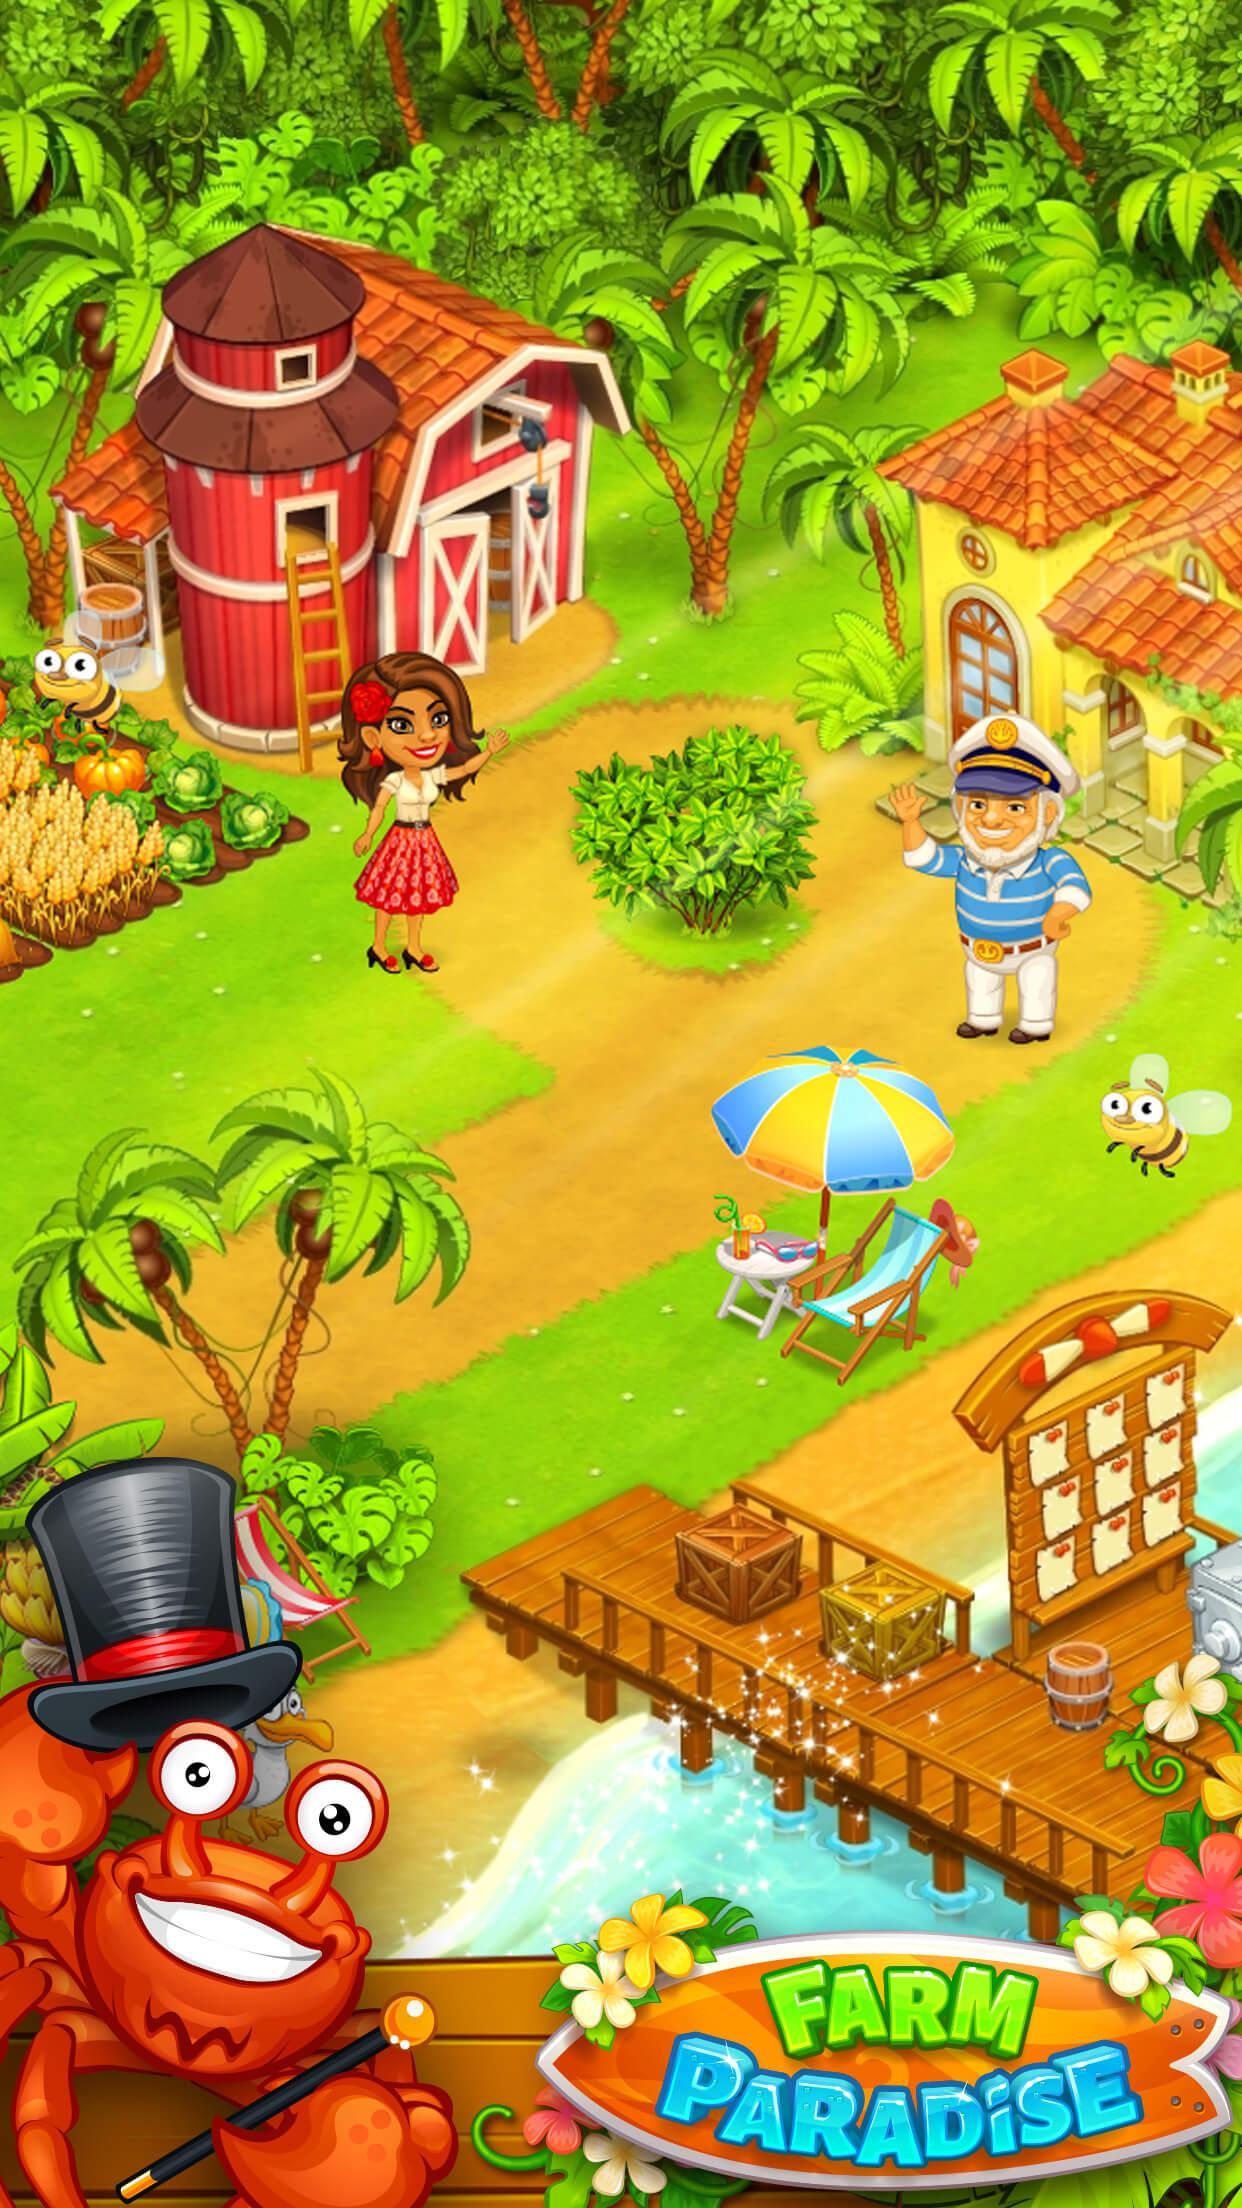 Farm Paradise Fun farm trade game at lost island 2.17 Screenshot 1